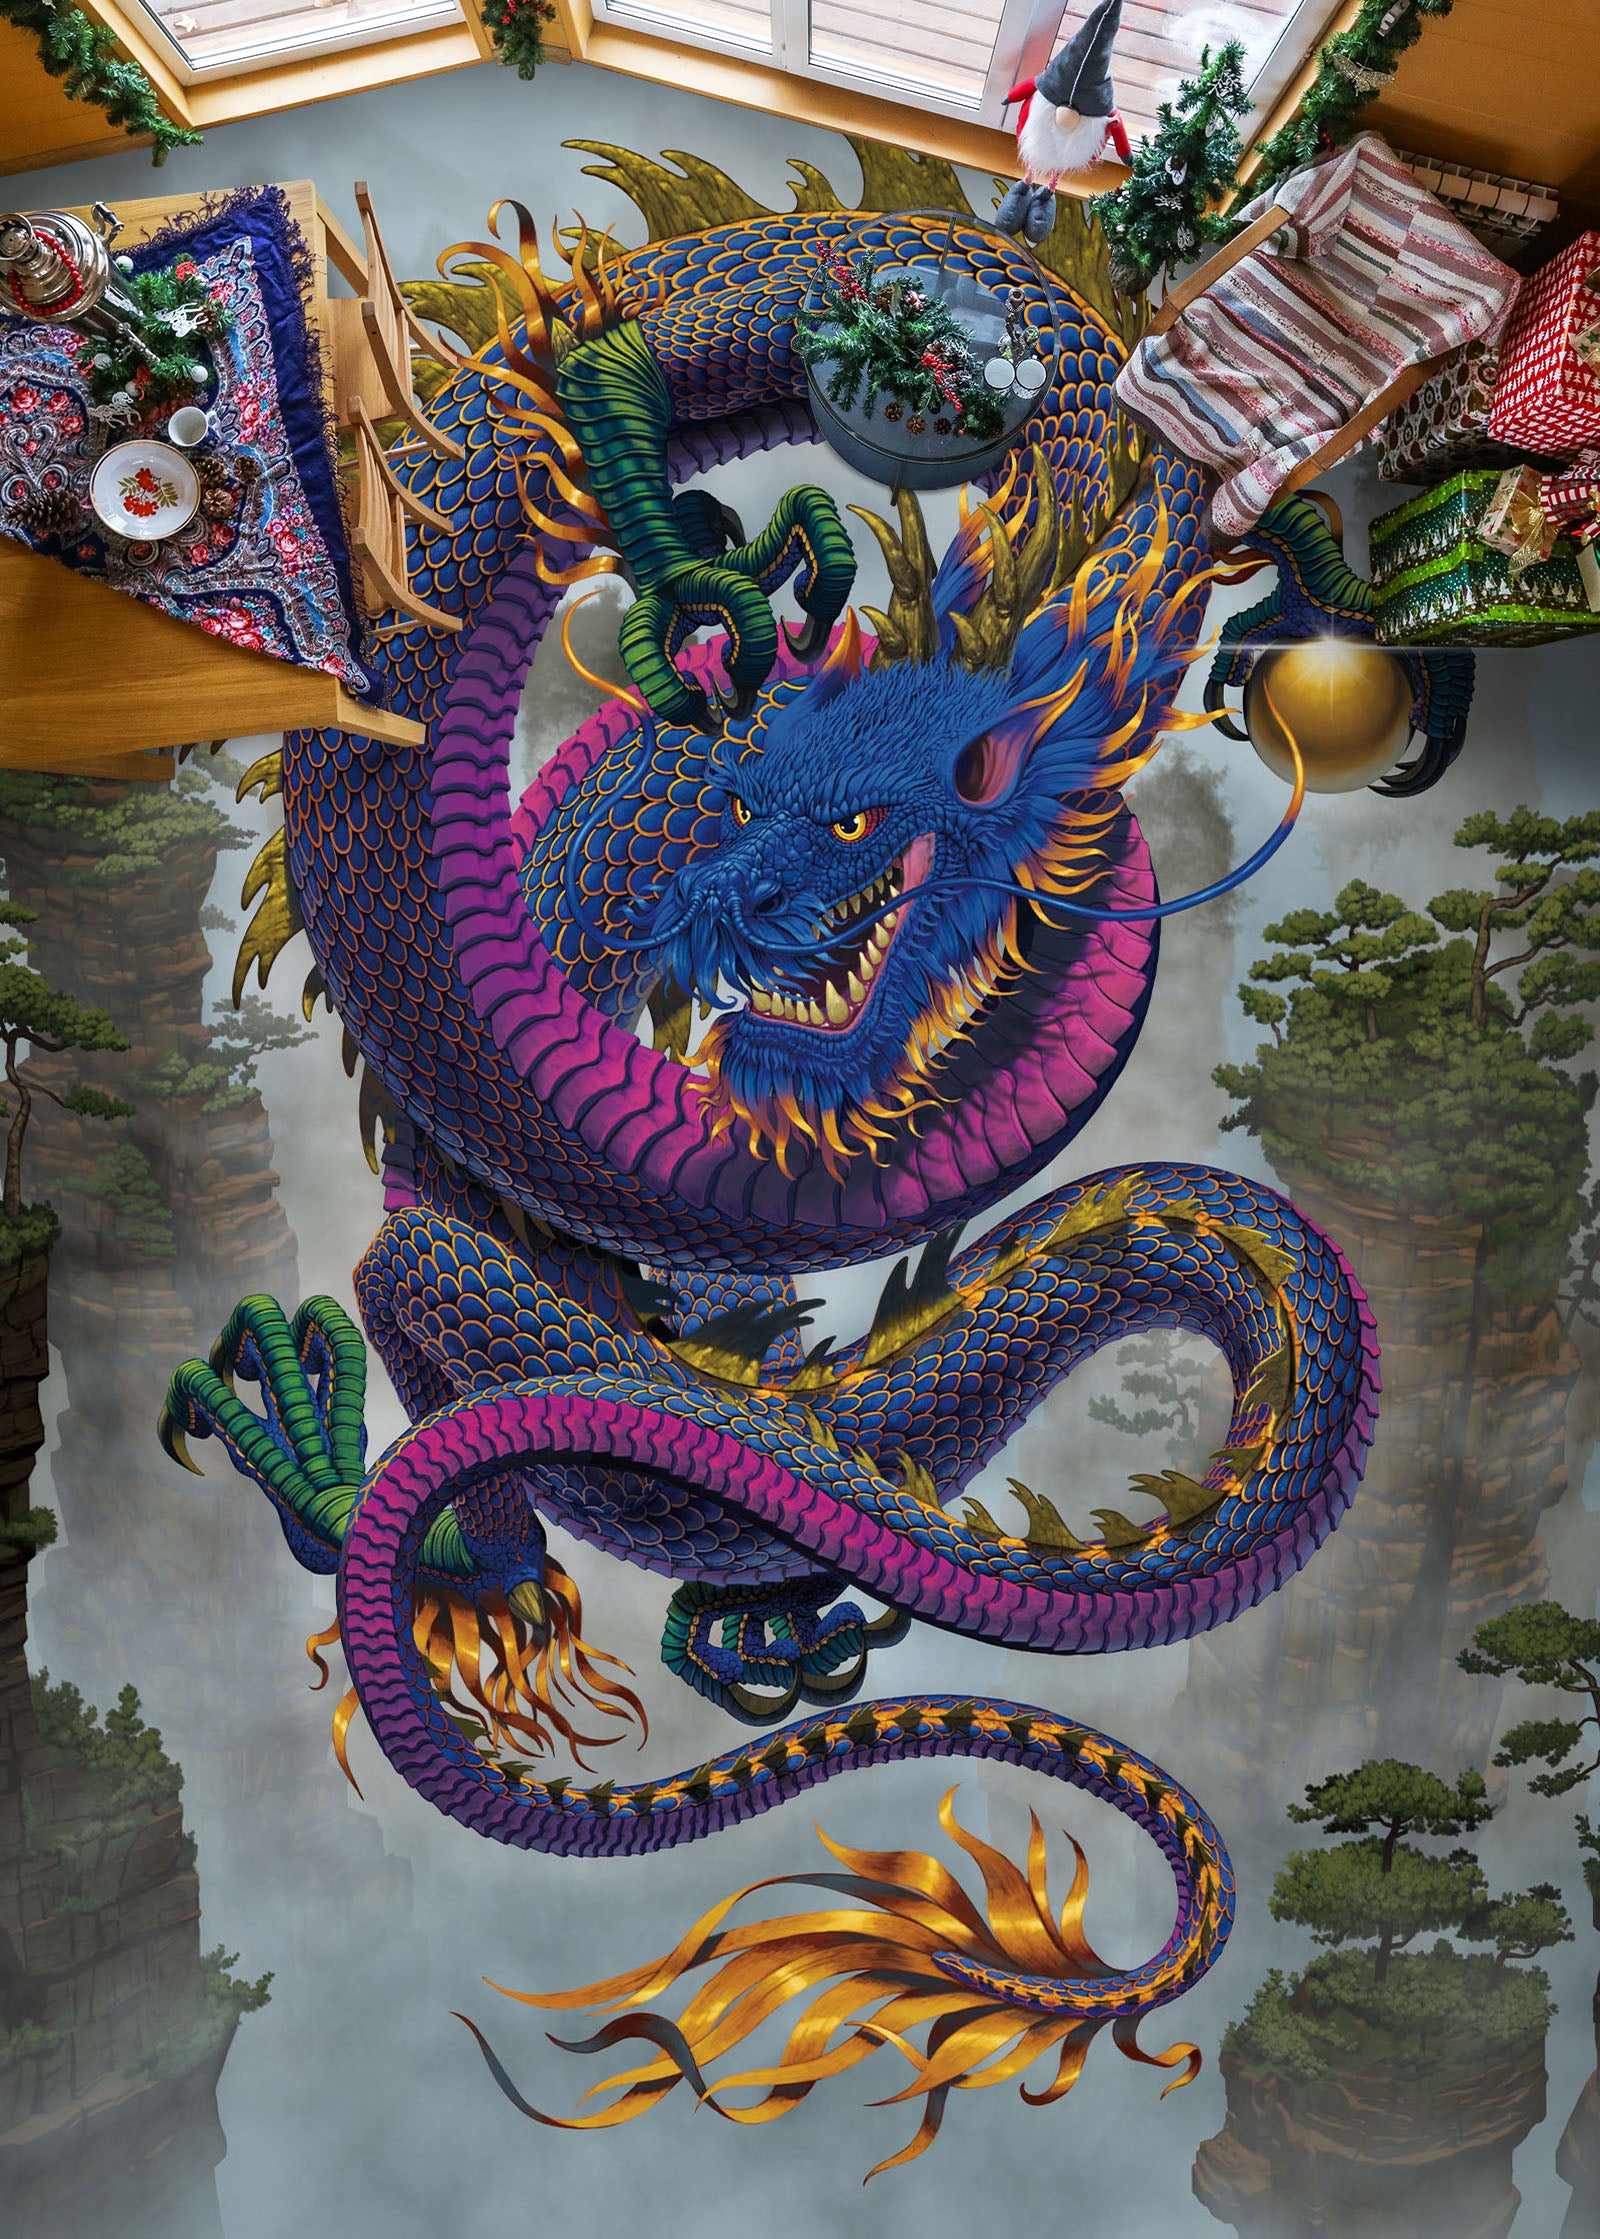 3D Purple Blue Dragon 98181 Vincent Floor Mural  Wallpaper Murals Self-Adhesive Removable Print Epoxy